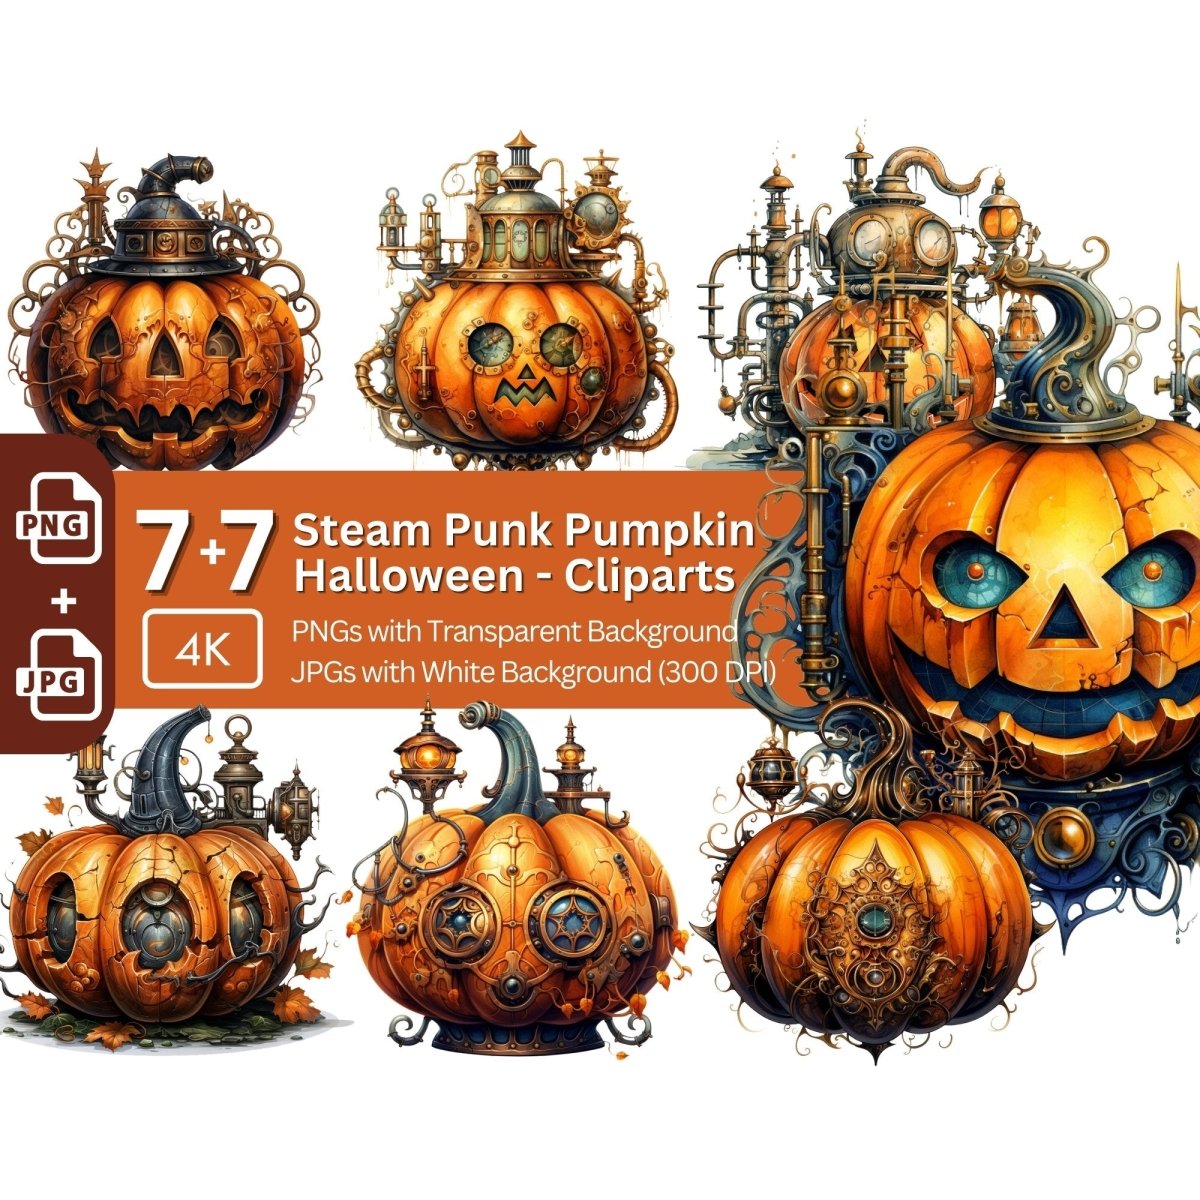 Steam Punk Pumpkin Clipart 7+7 PNG/JPG Bundle Halloween Graphic - Everything Pixel